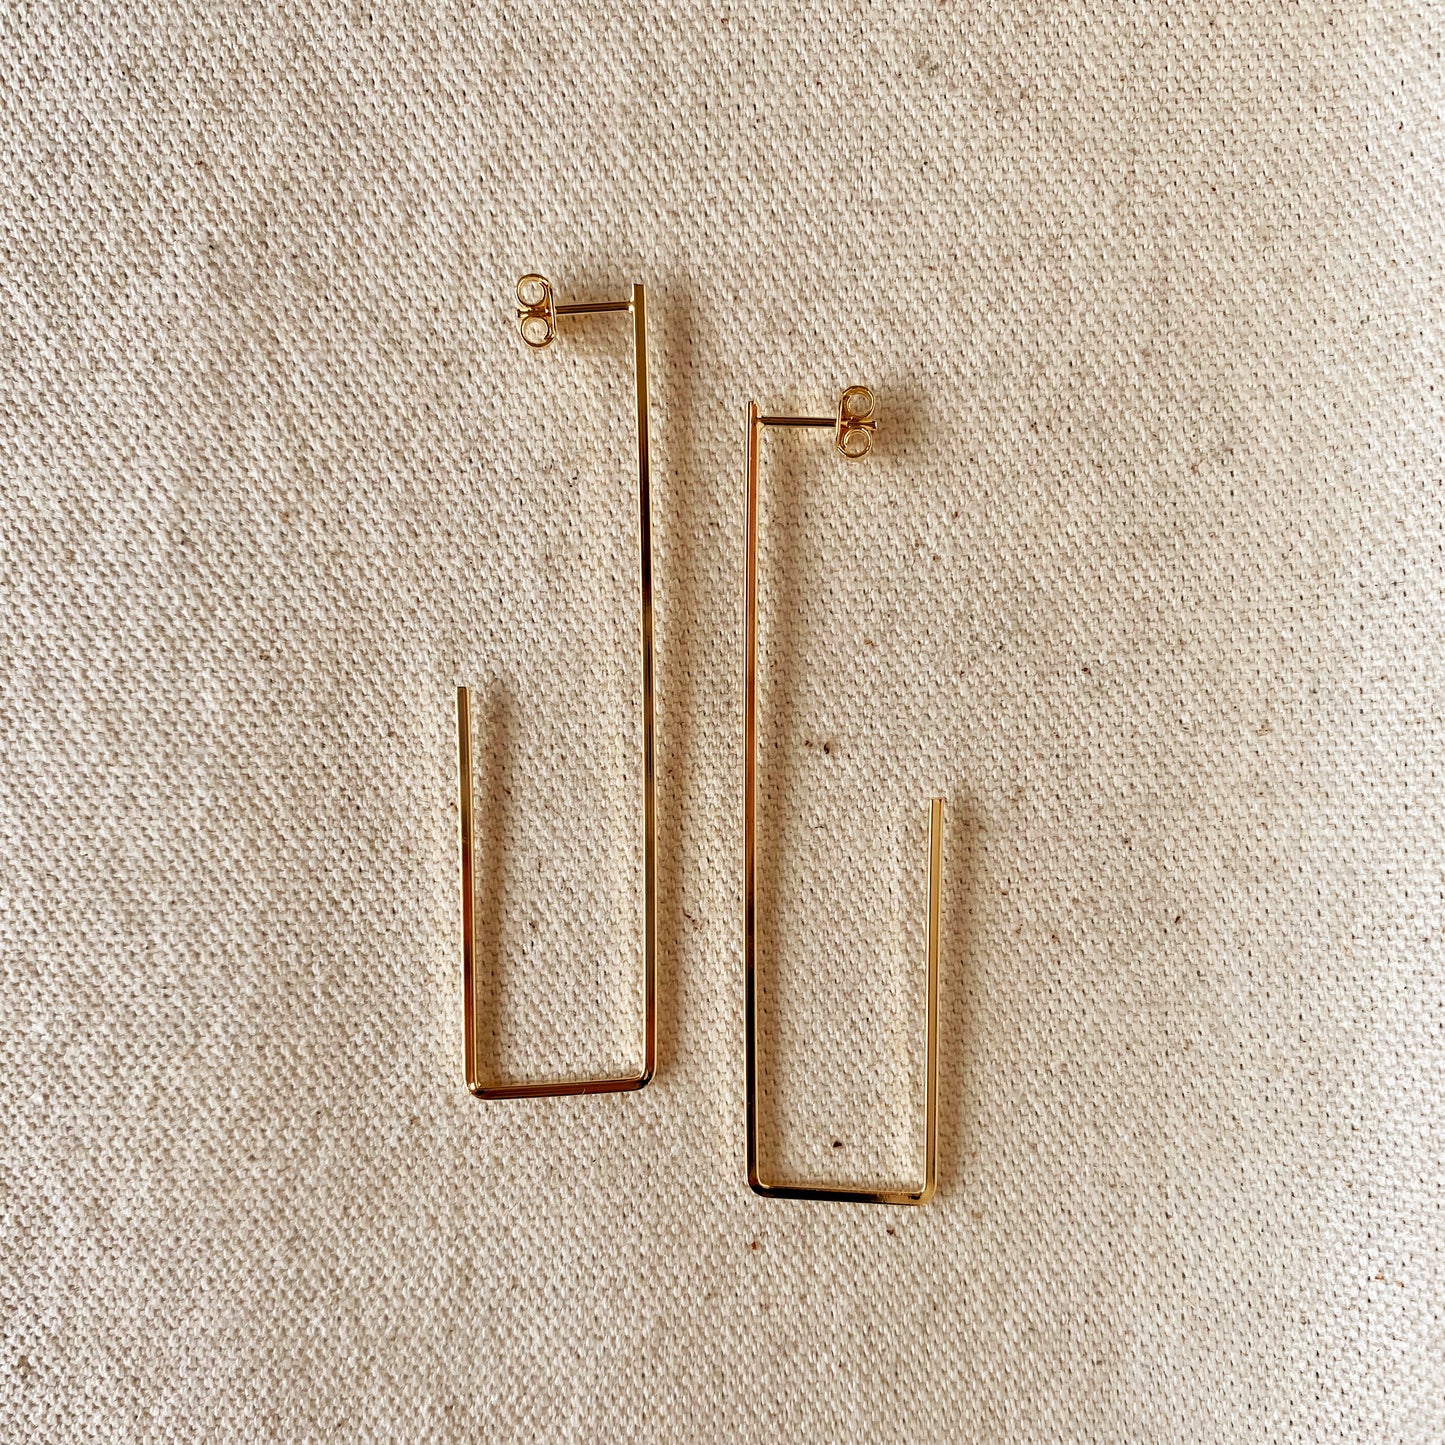 GoldFi 18k Gold Filled Rectangle Shaped Earrings